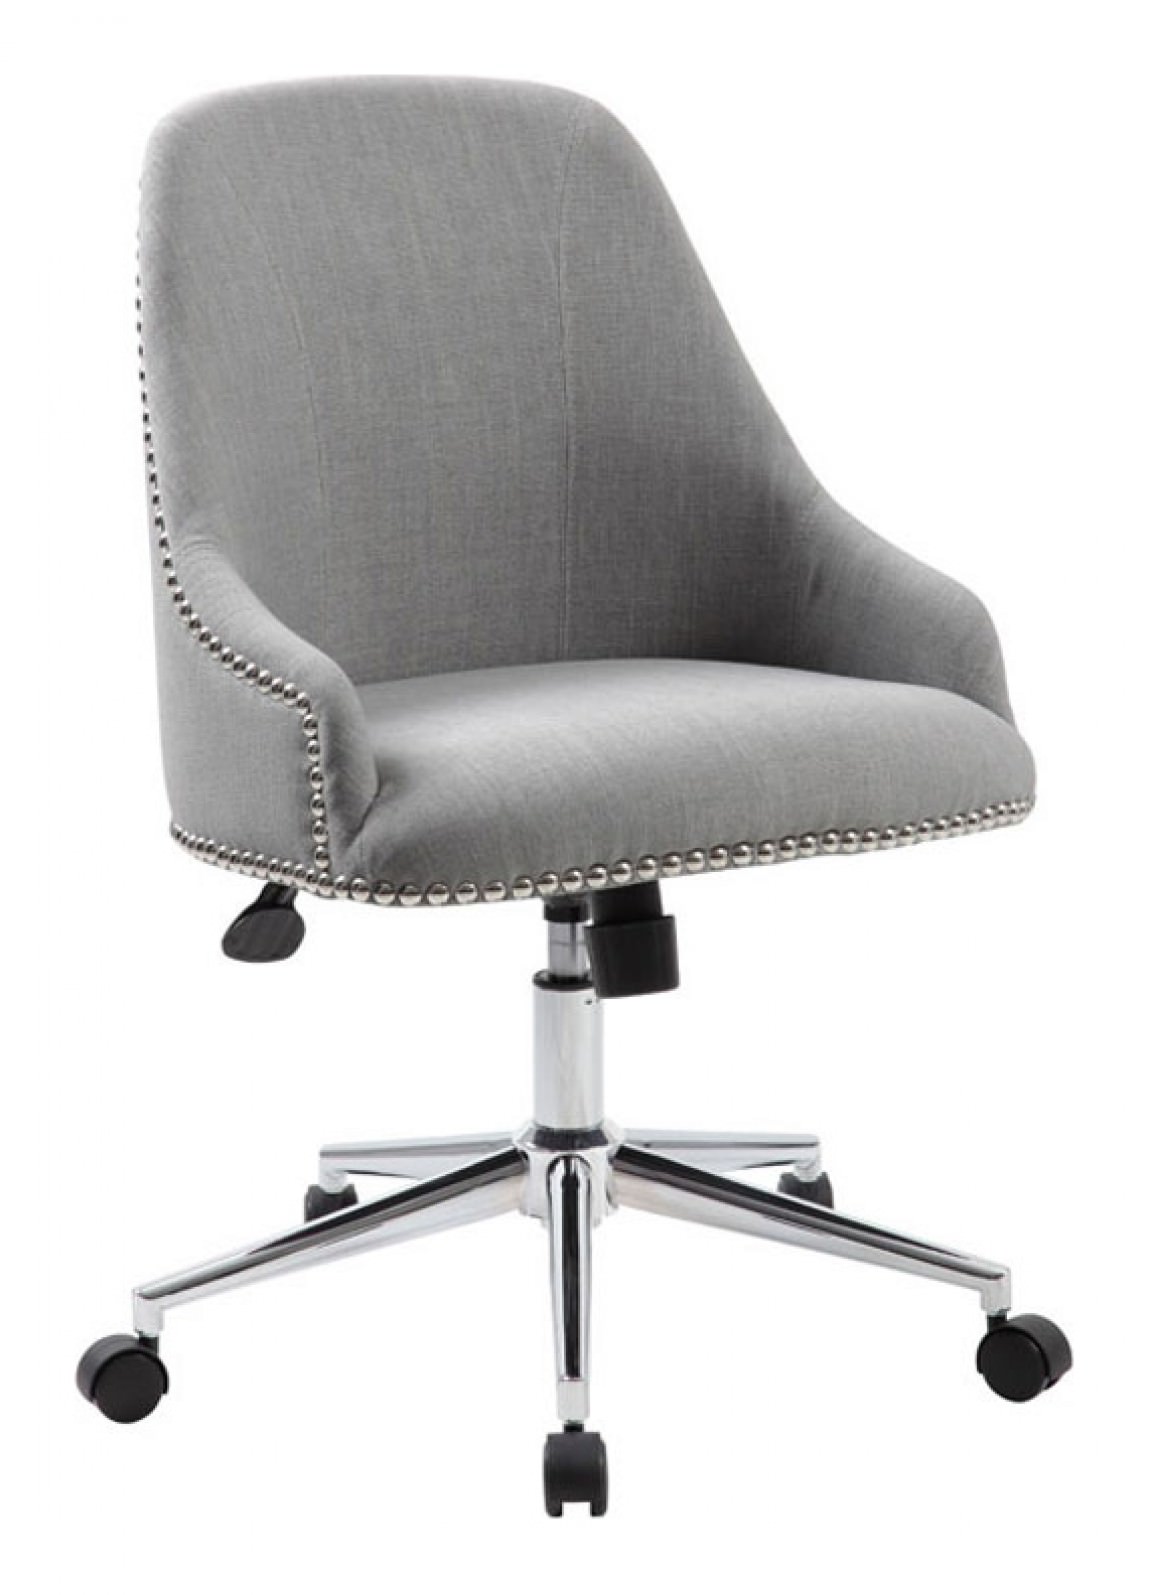 https://madisonliquidators.com/images/p/1150/31407-adjustable-height-task-chair-1.jpg